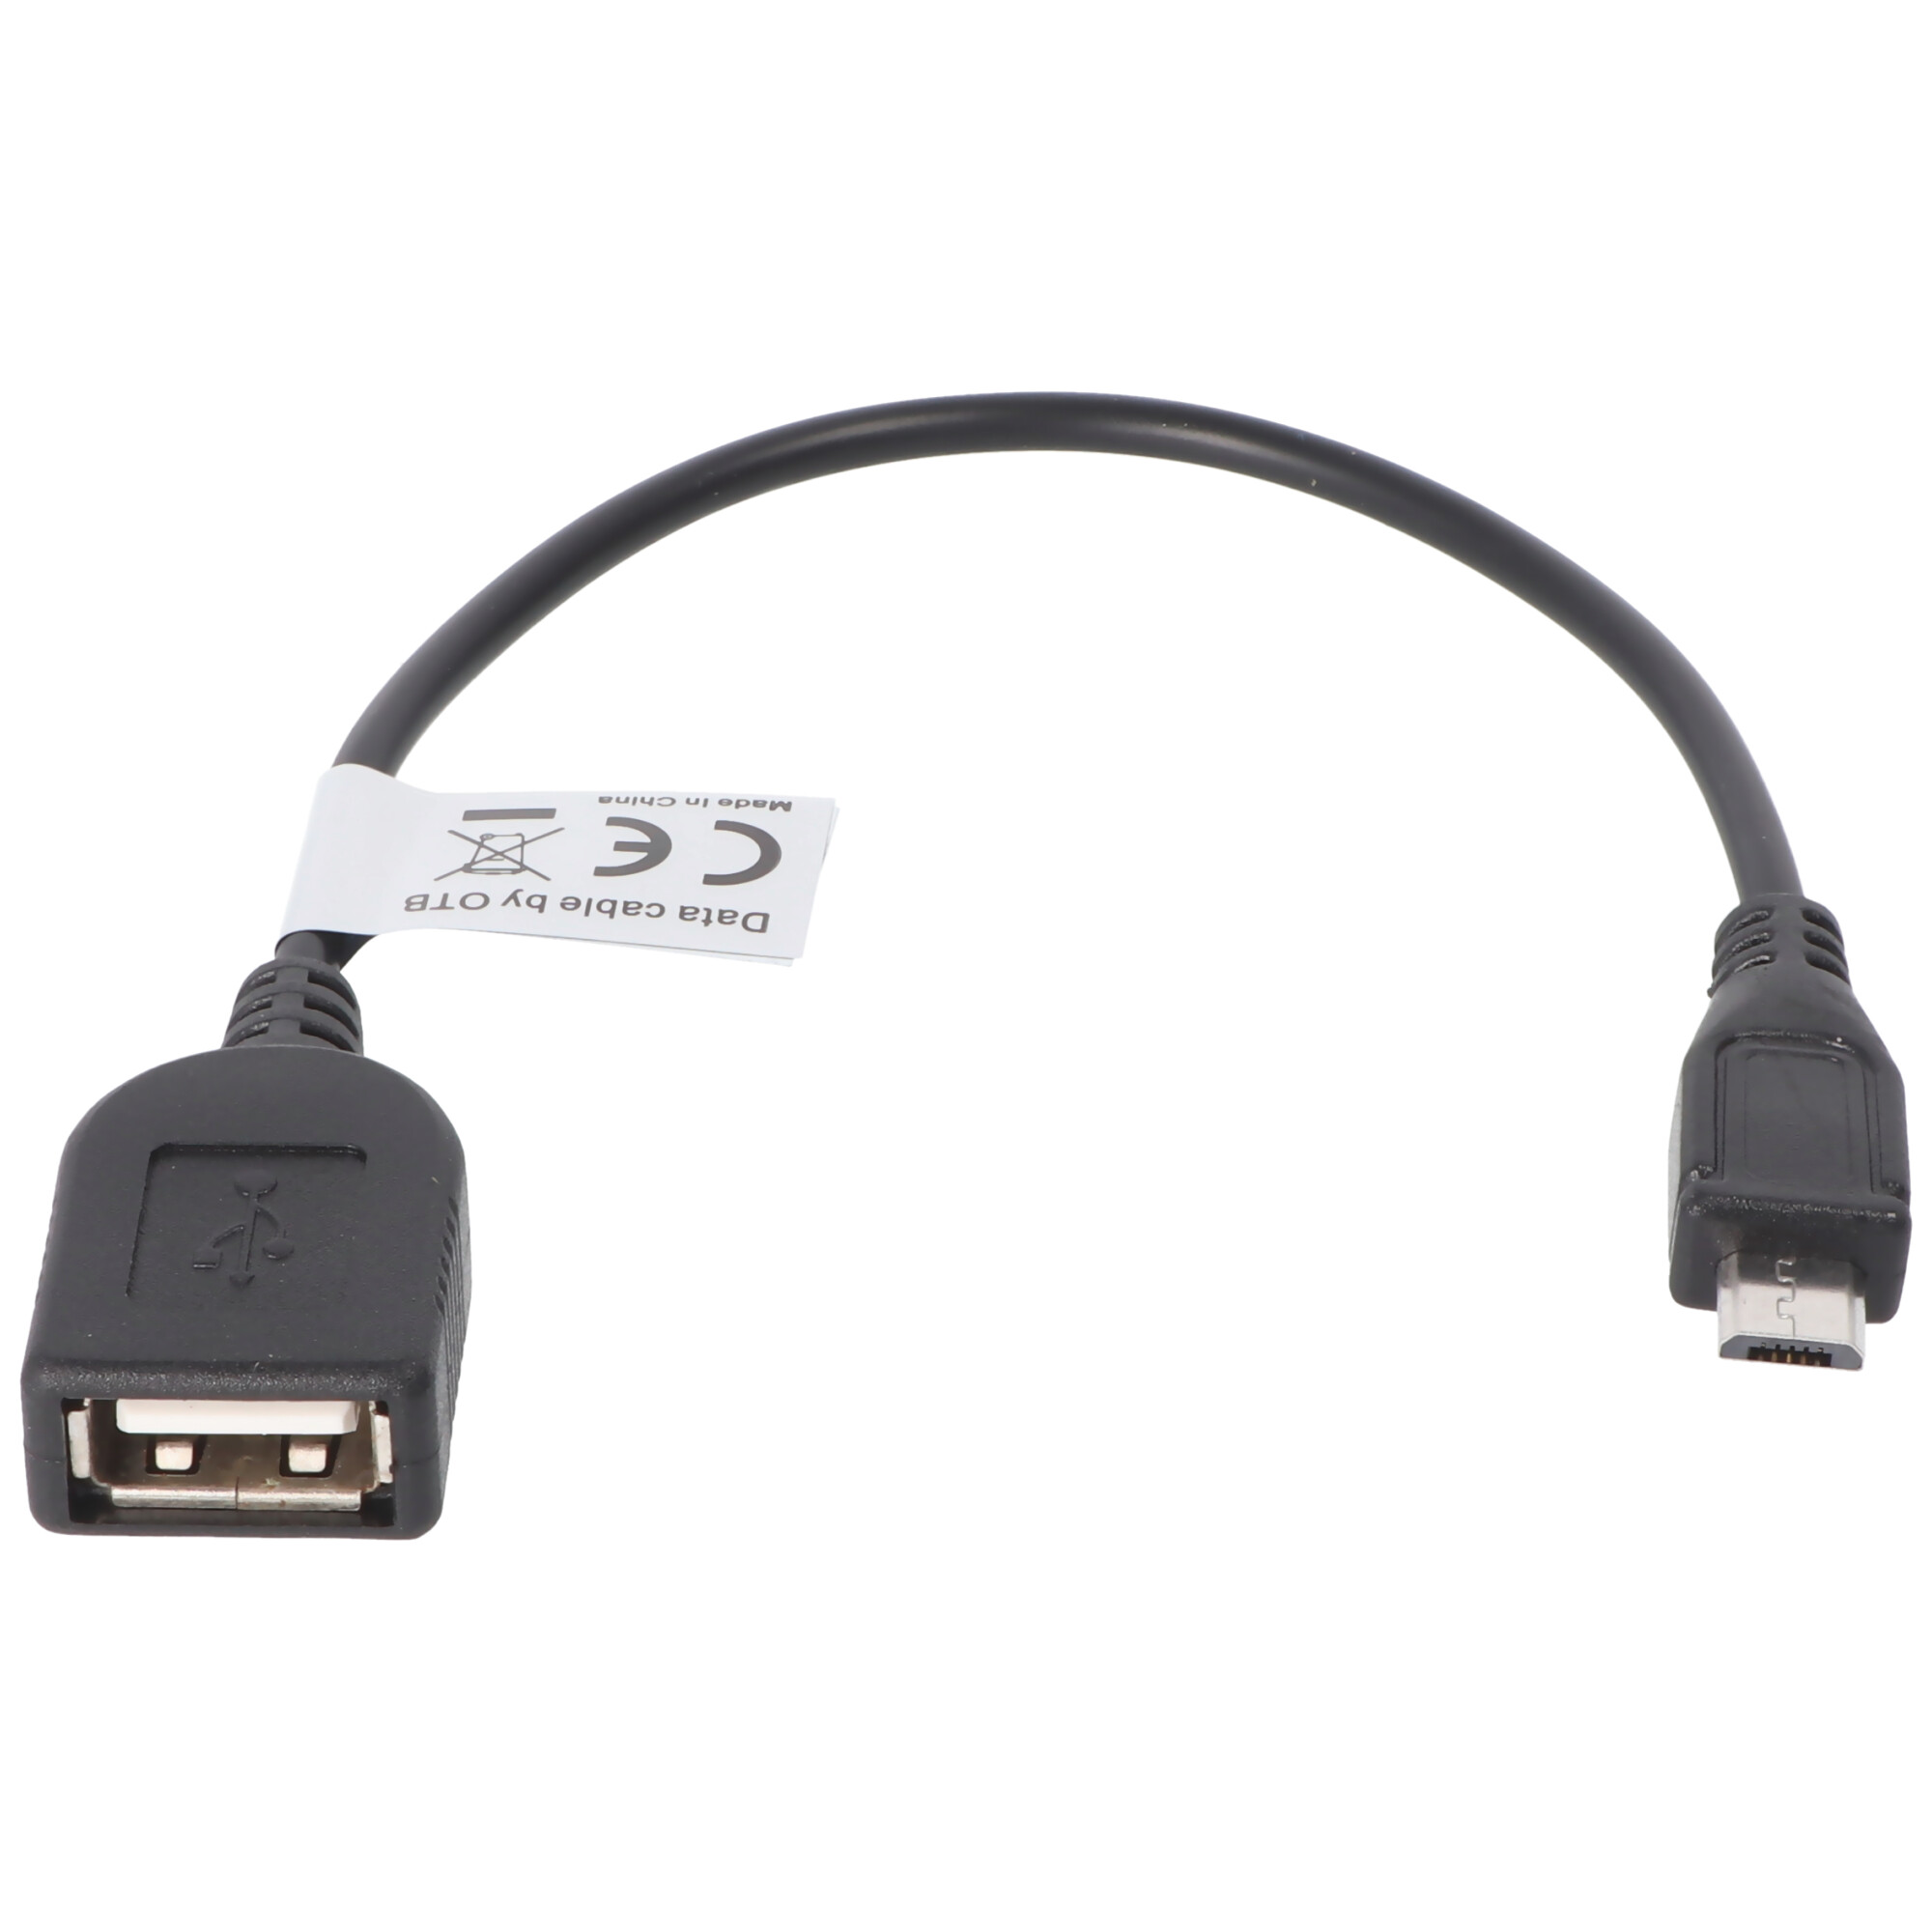 Adapterkabel Micro-USB OTG (USB On-The-Go) für Smartphones, Tablets und Camcorder